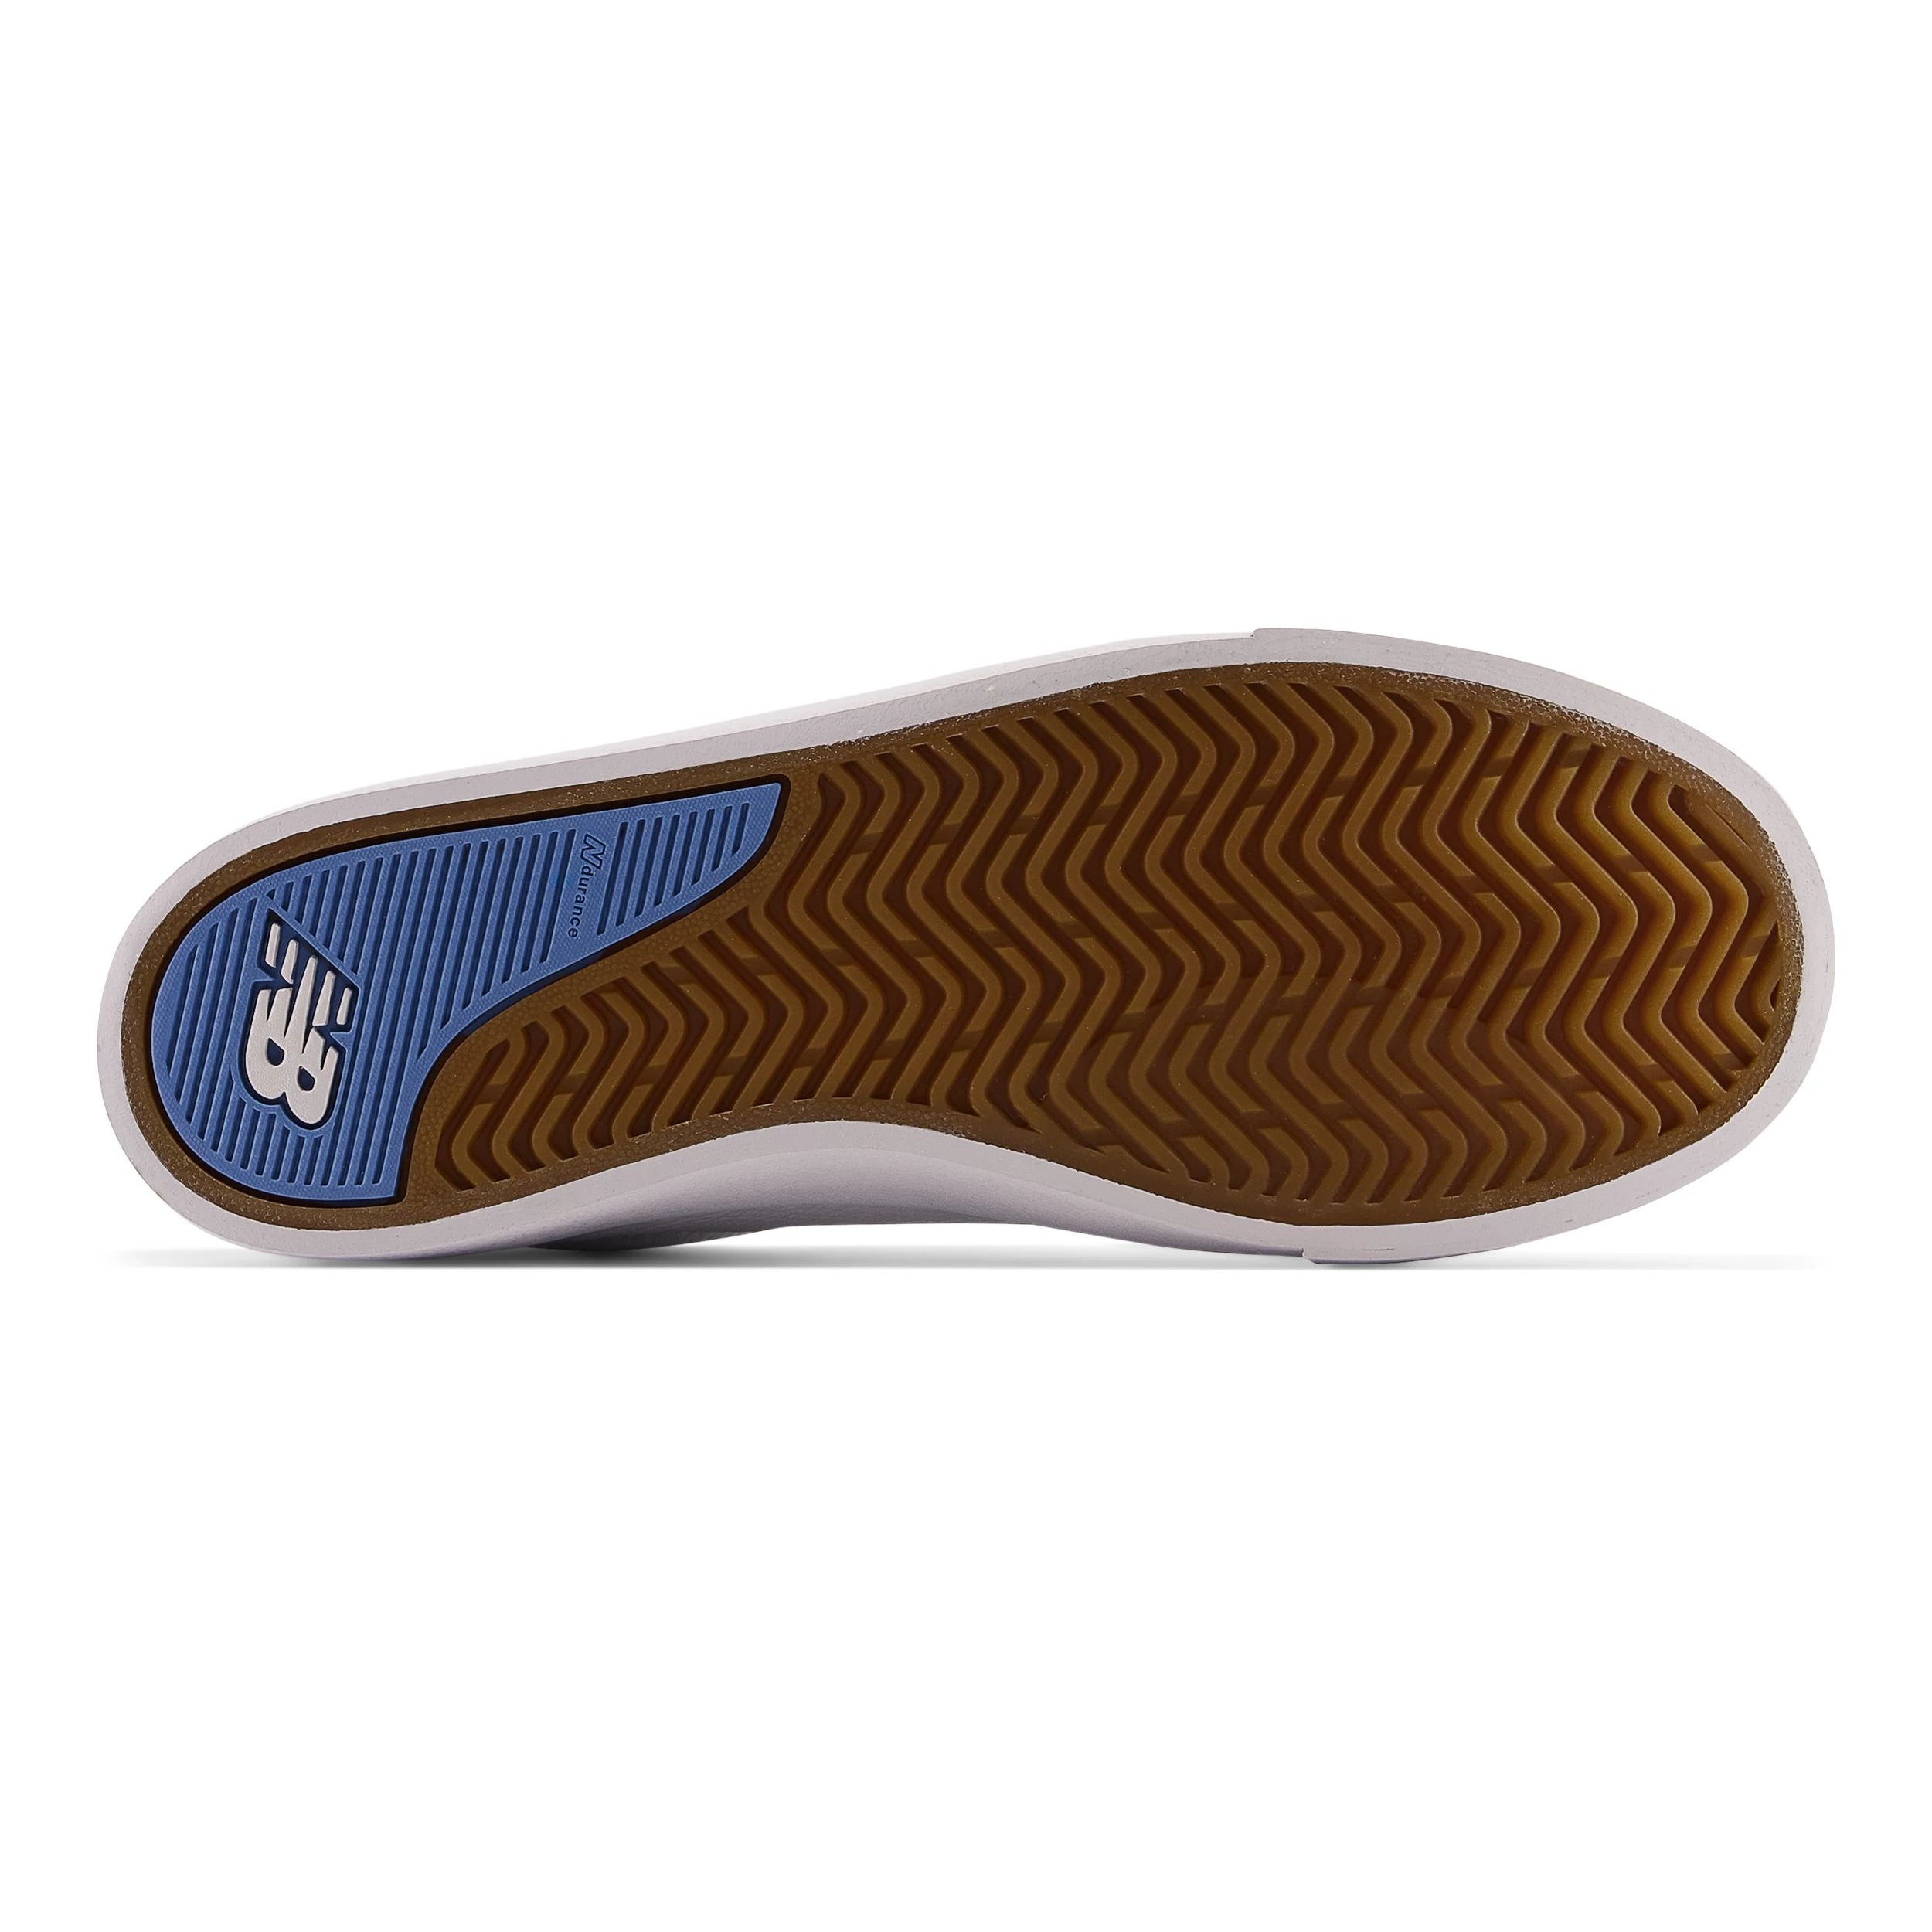 White/Blue NM22 NB Numeric Skate Shoe Bottom